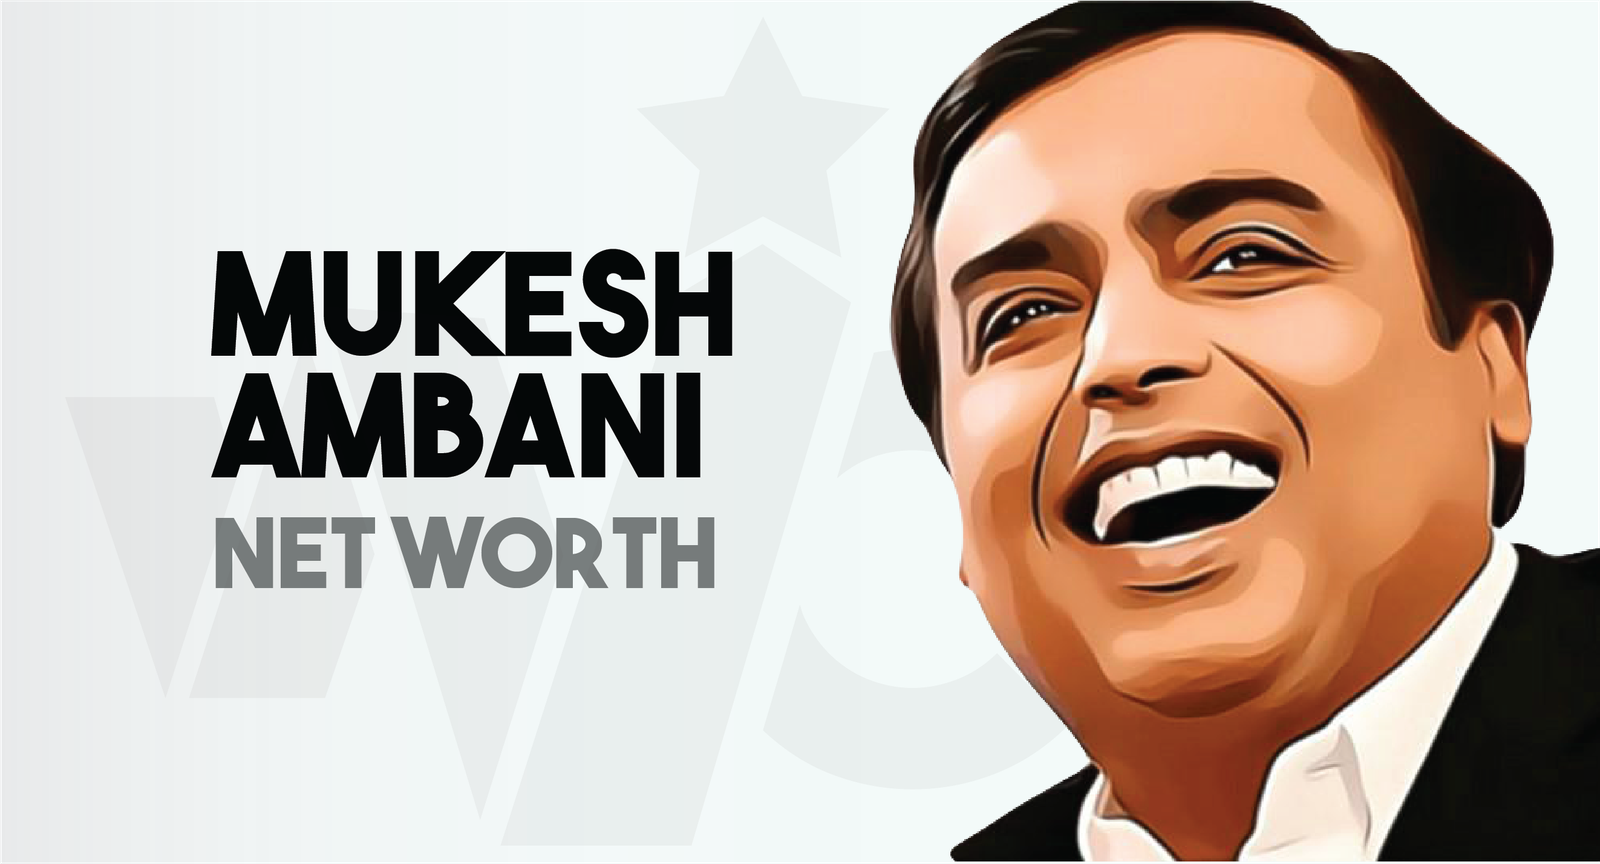 Mukesh Ambani Net Worth, Age, Height, Caste, Family, Biography & More